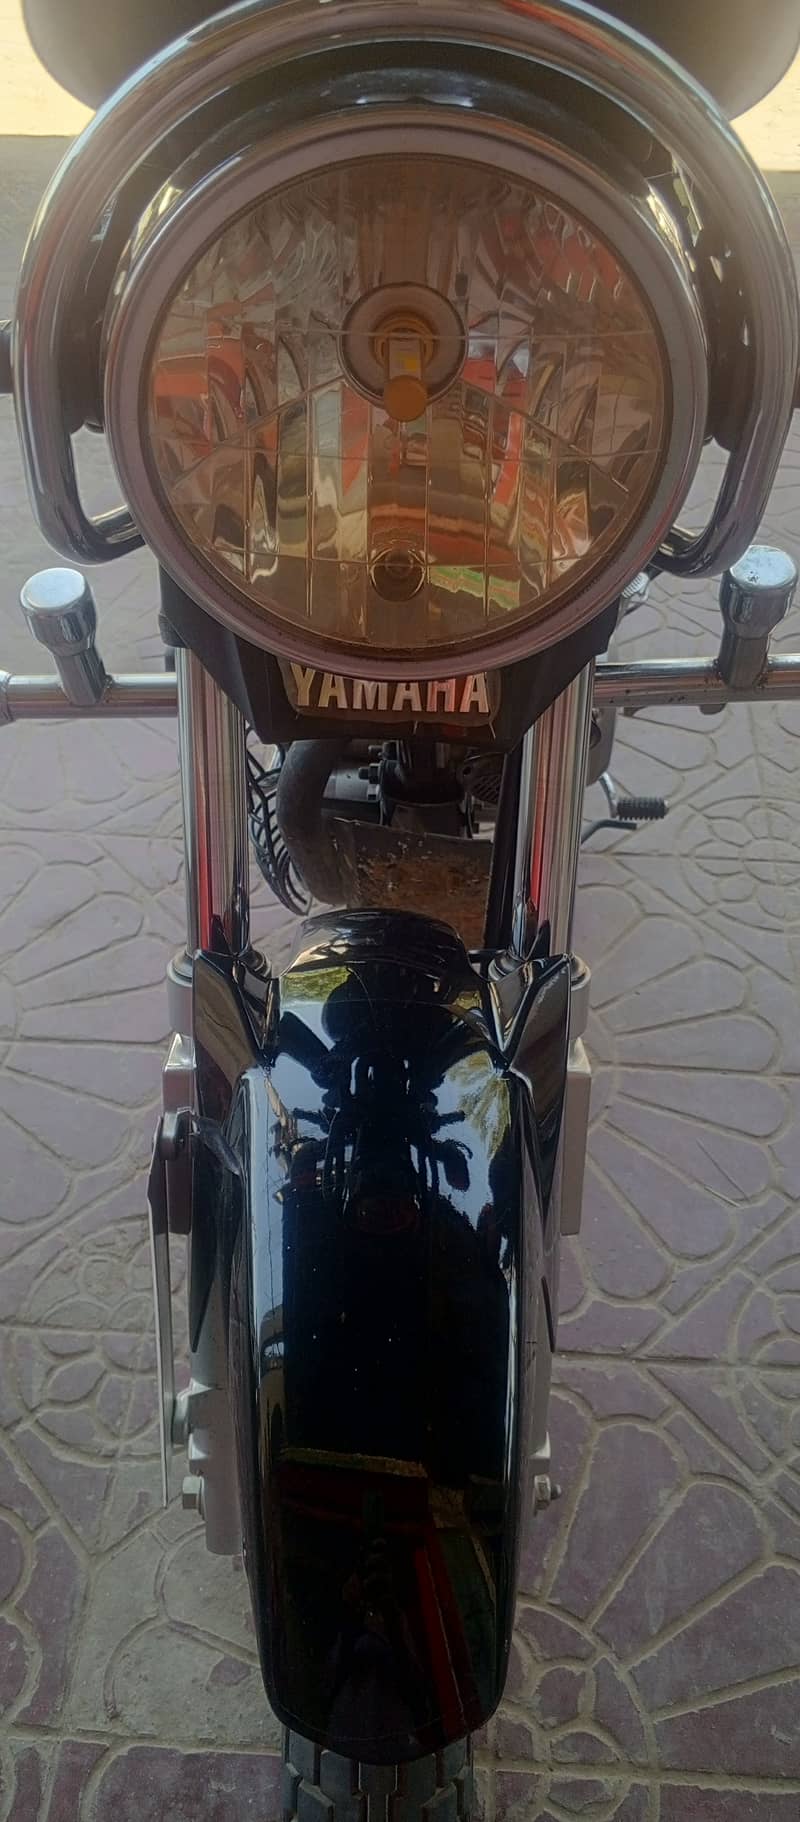 Yamaha ybz125 3